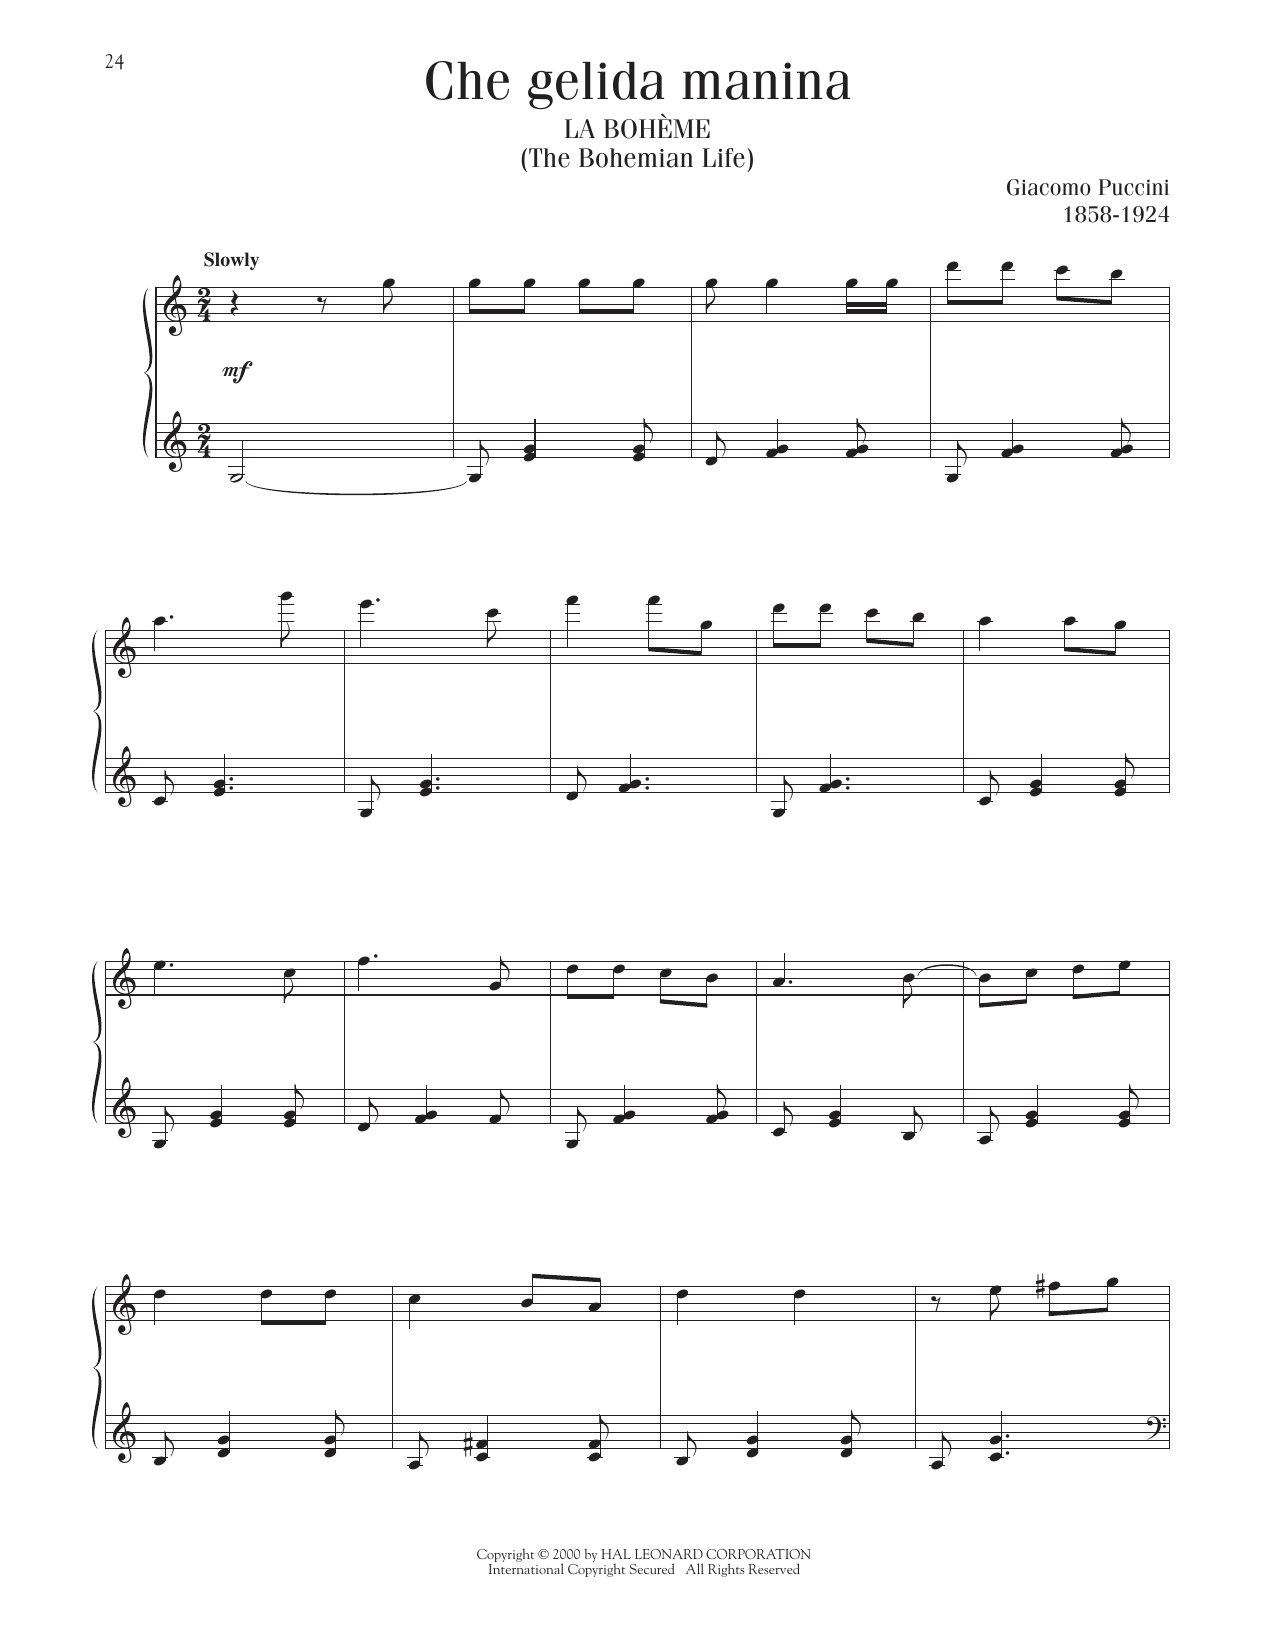 Giacomo Puccini Che Gelida Manina sheet music notes printable PDF score